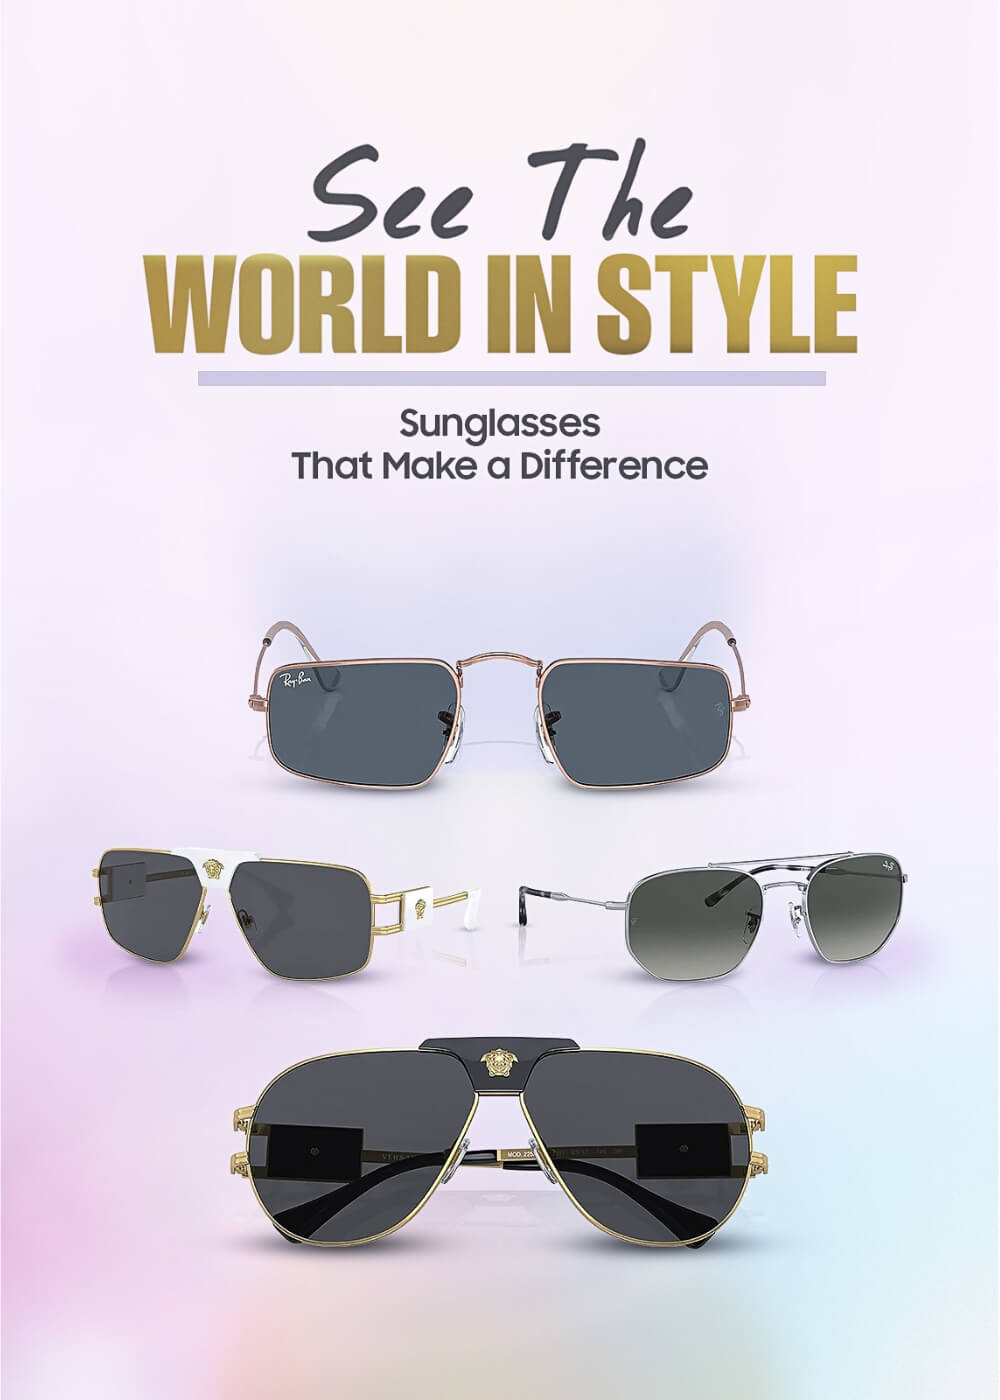 Shades from RayBan, Versace, Gucci, Prada, Burberry Sunglasses in NZ